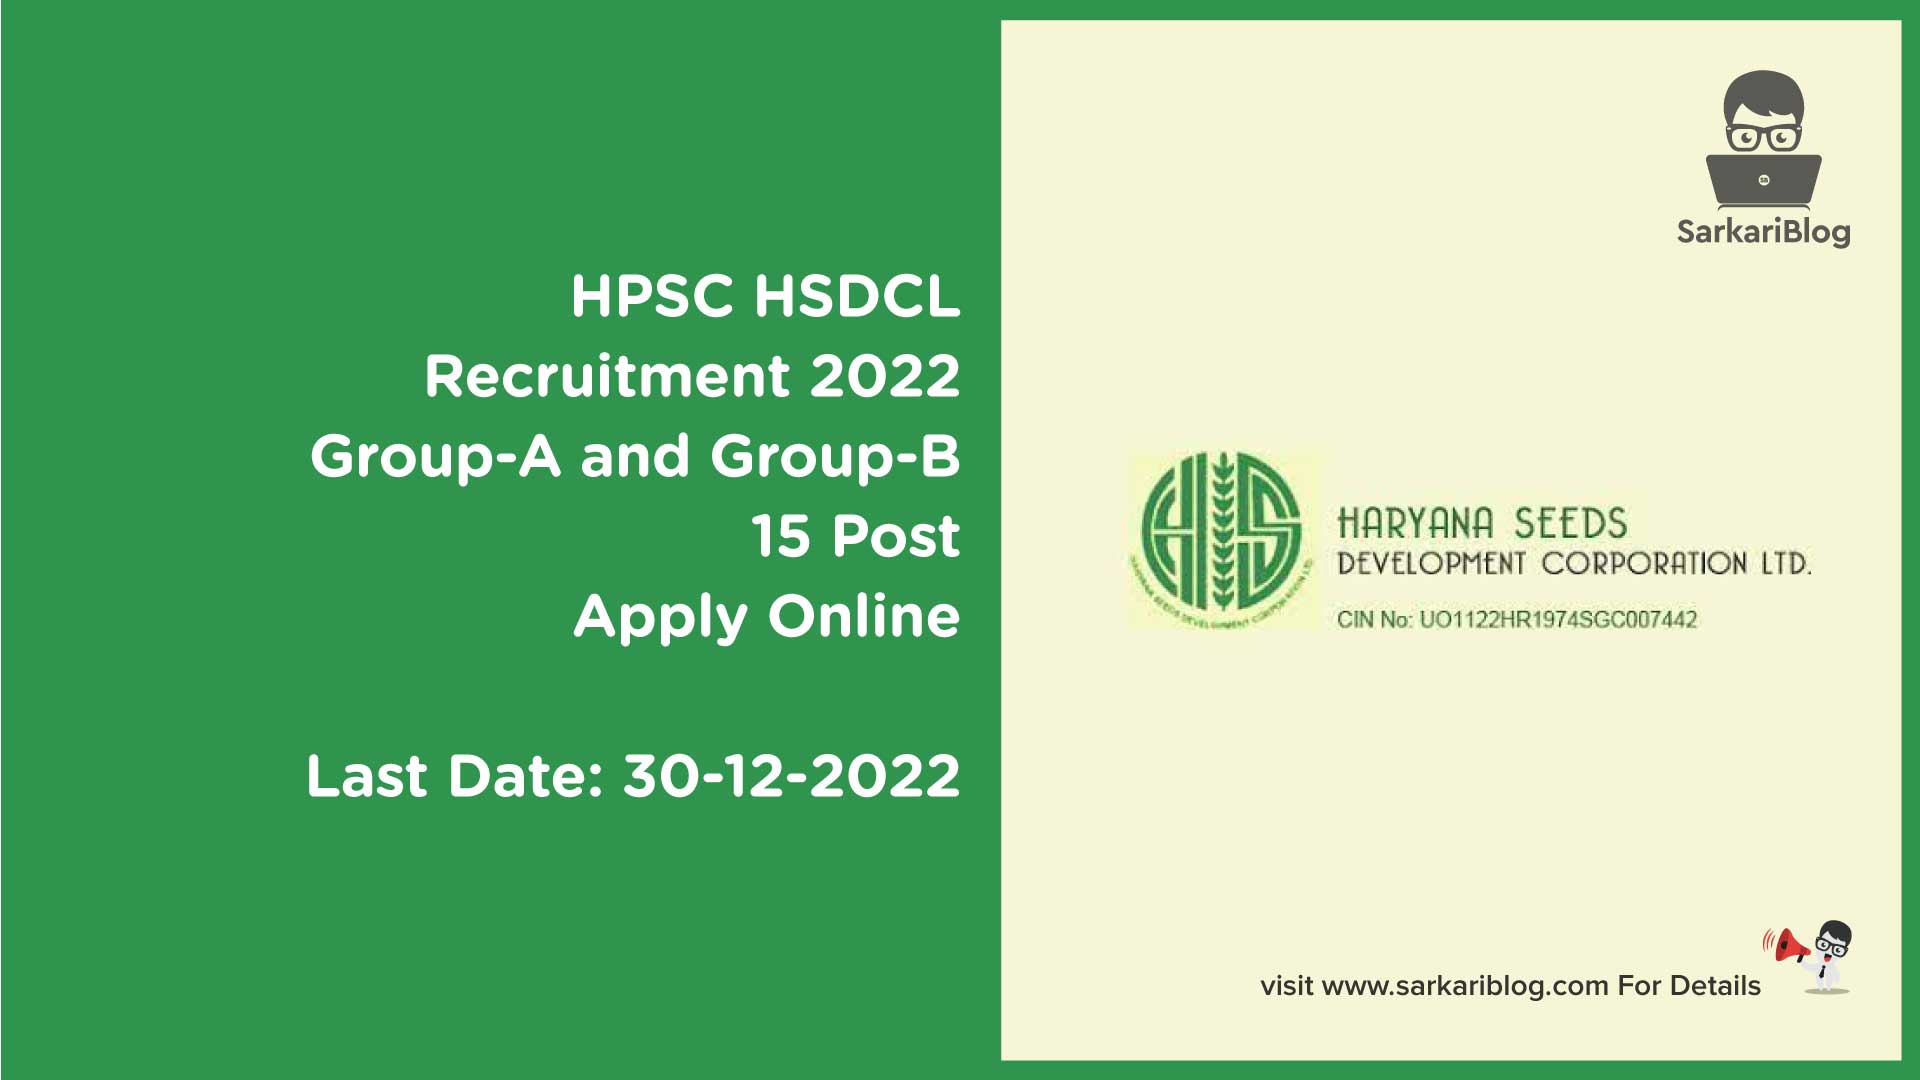 HPSC HSDCL Recruitment 2022